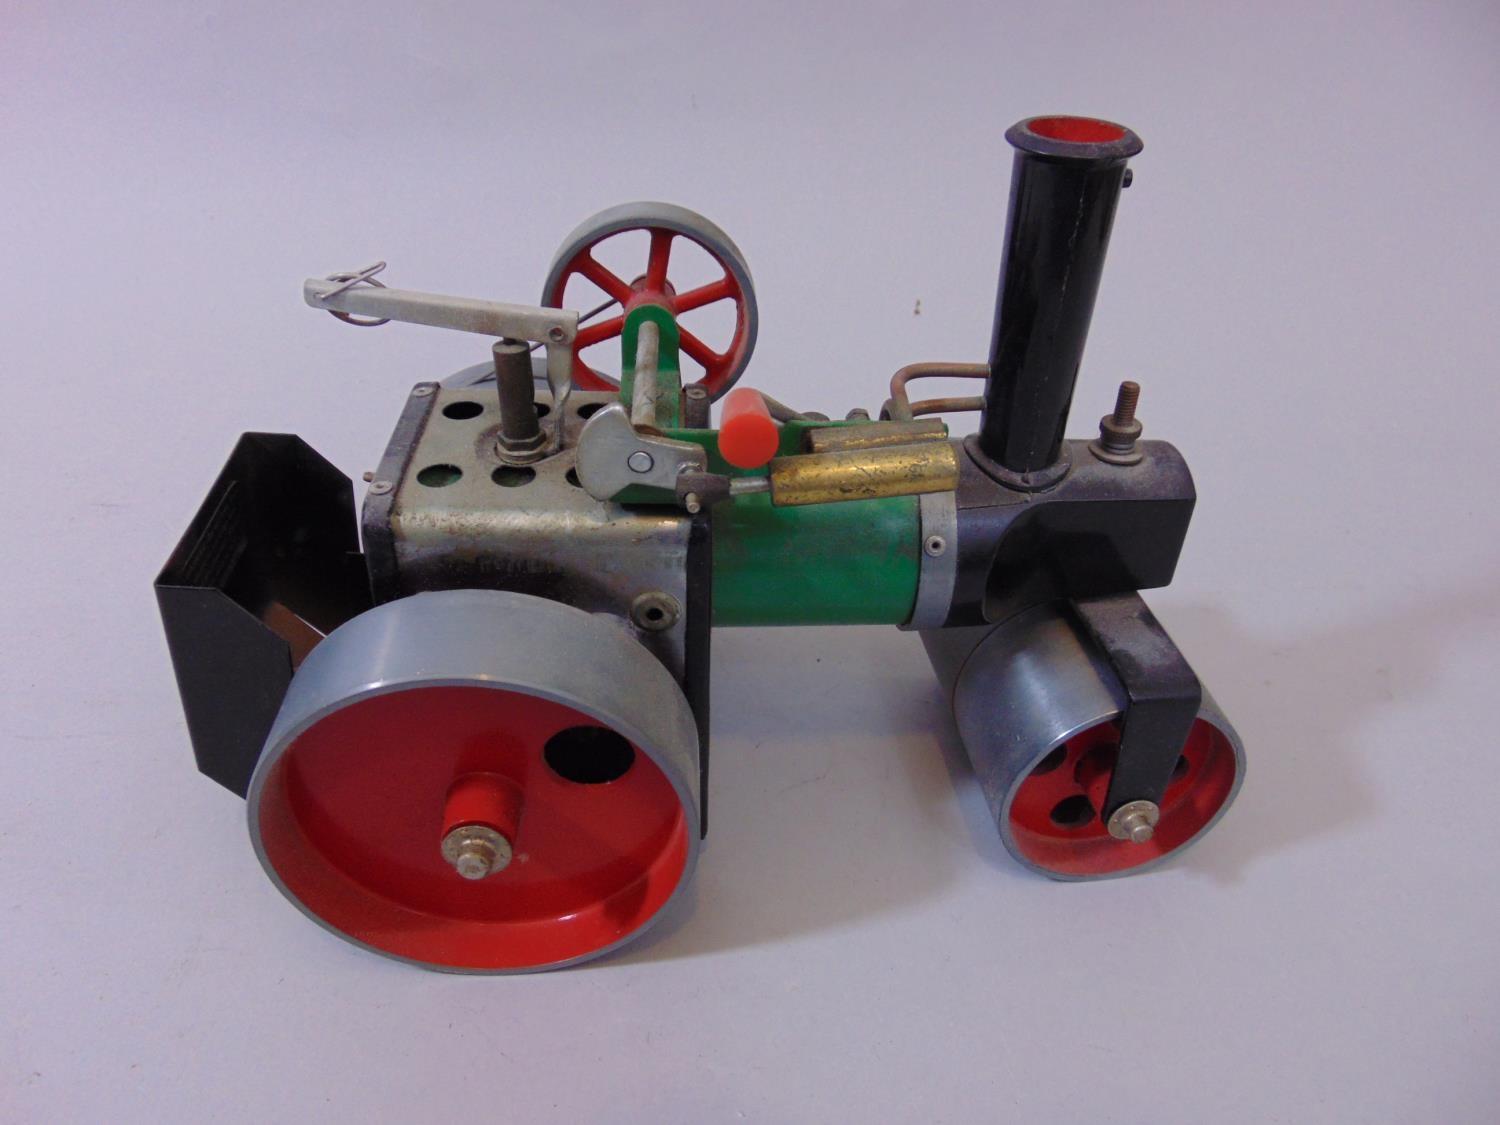 Mamod Steamroller, steam engine with burner - Image 2 of 2